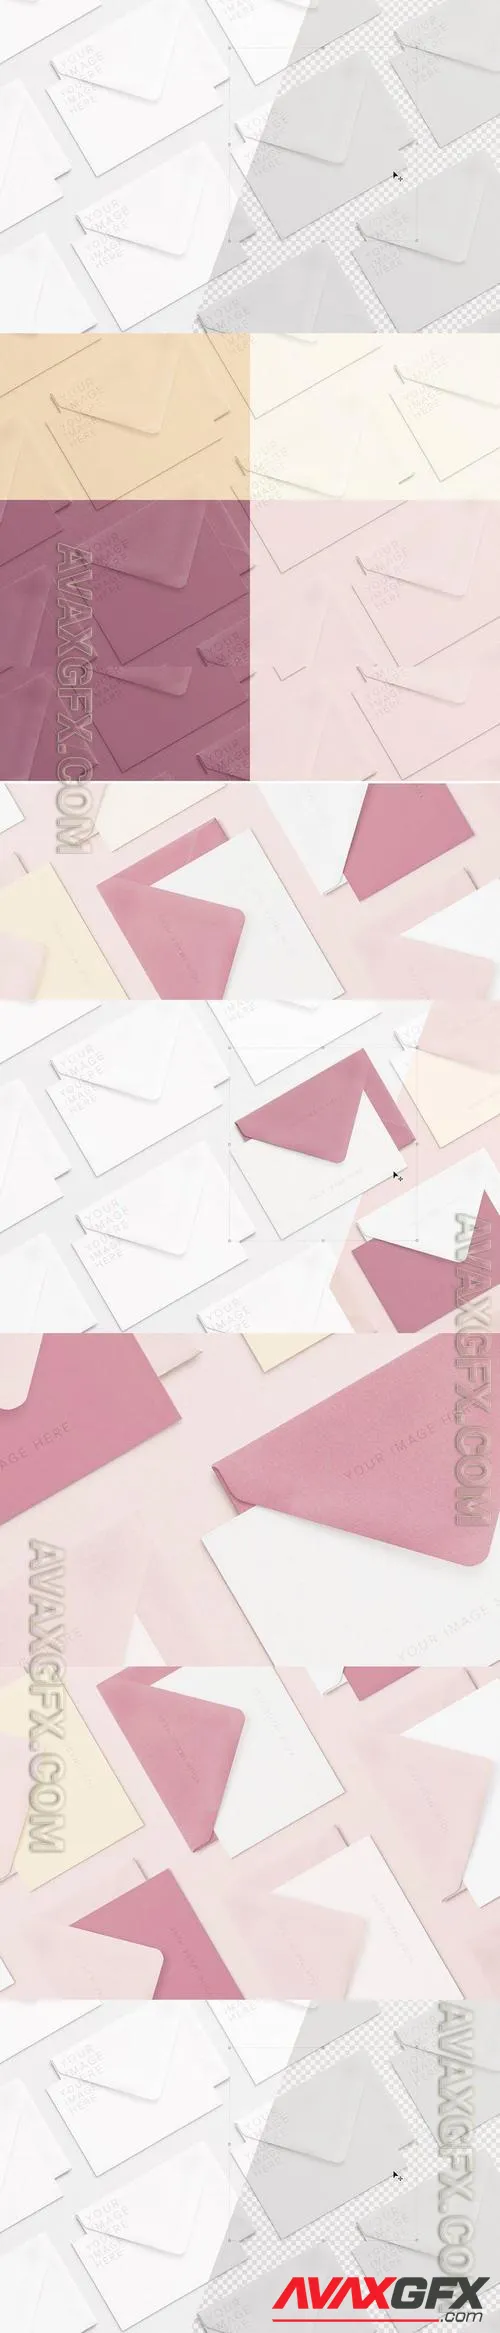 Cards and Envelope Diagonal Layout Mockup